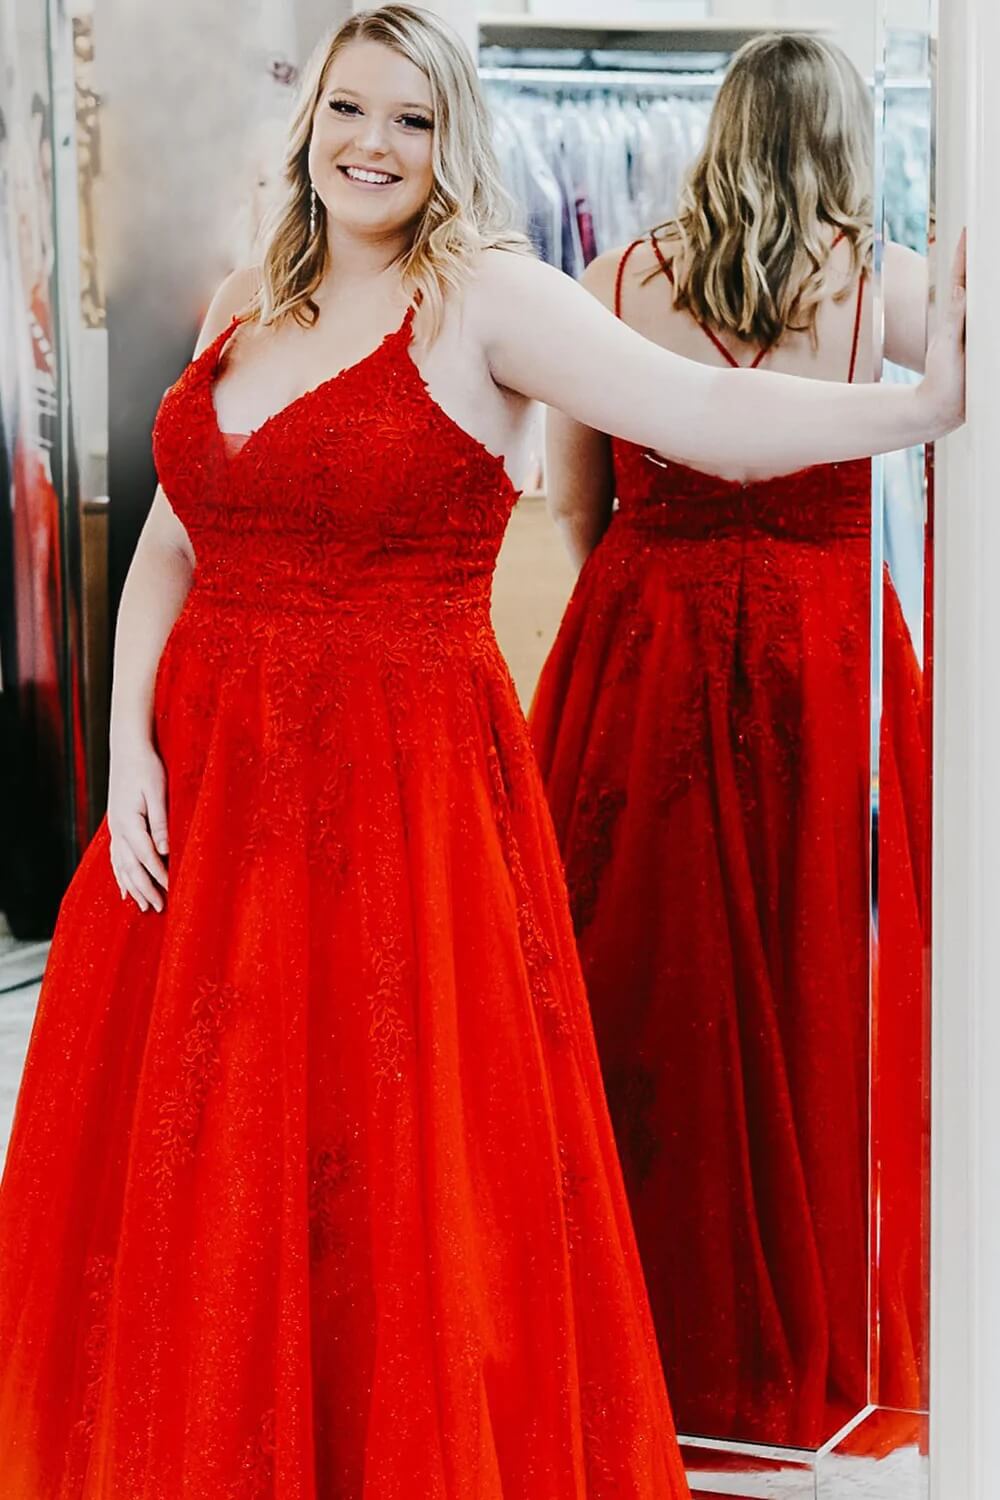 Gigi Hadid Red Lace Celebrity Formal Prom Dress Met Gala 2015